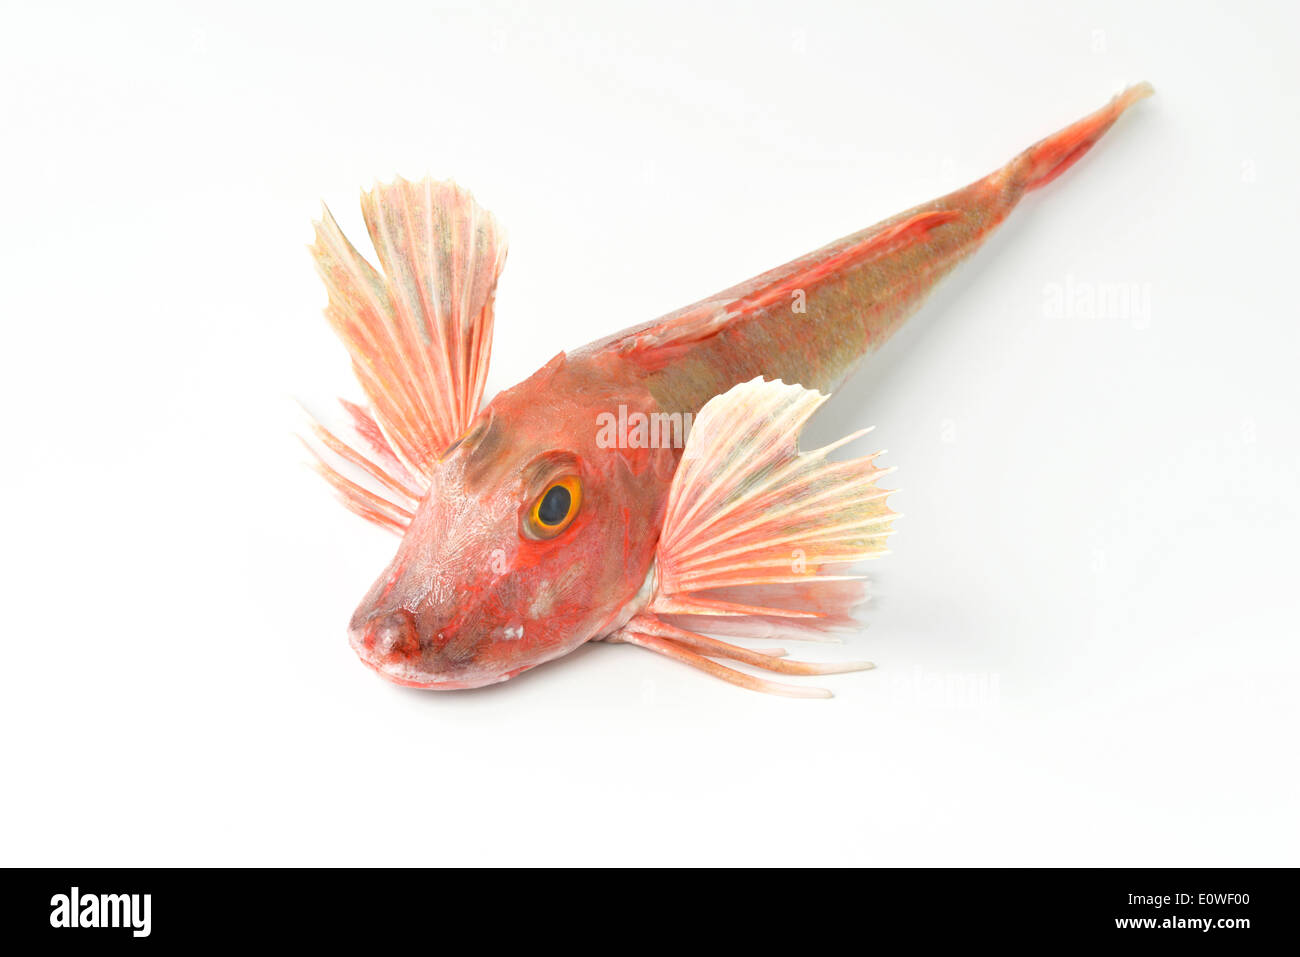 Tub Gurnard (Chelidonichthys lucernus). Dead fish. Studio picture against a white background Stock Photo